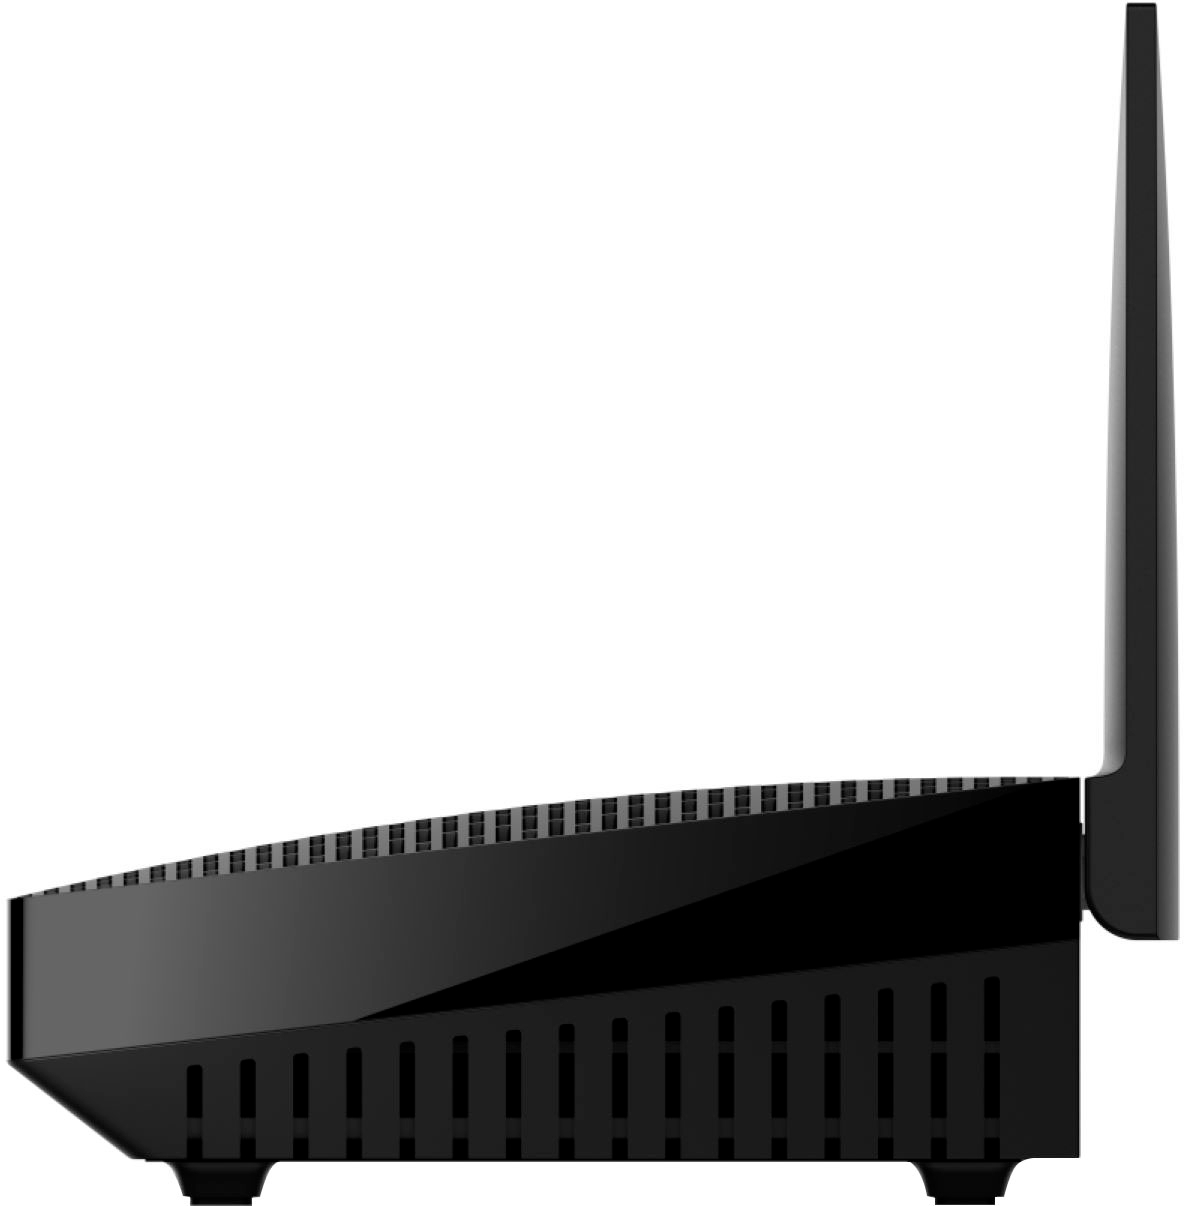 Redmi AX3000 Wifi Router Slow & Weird Throttle. Help : r